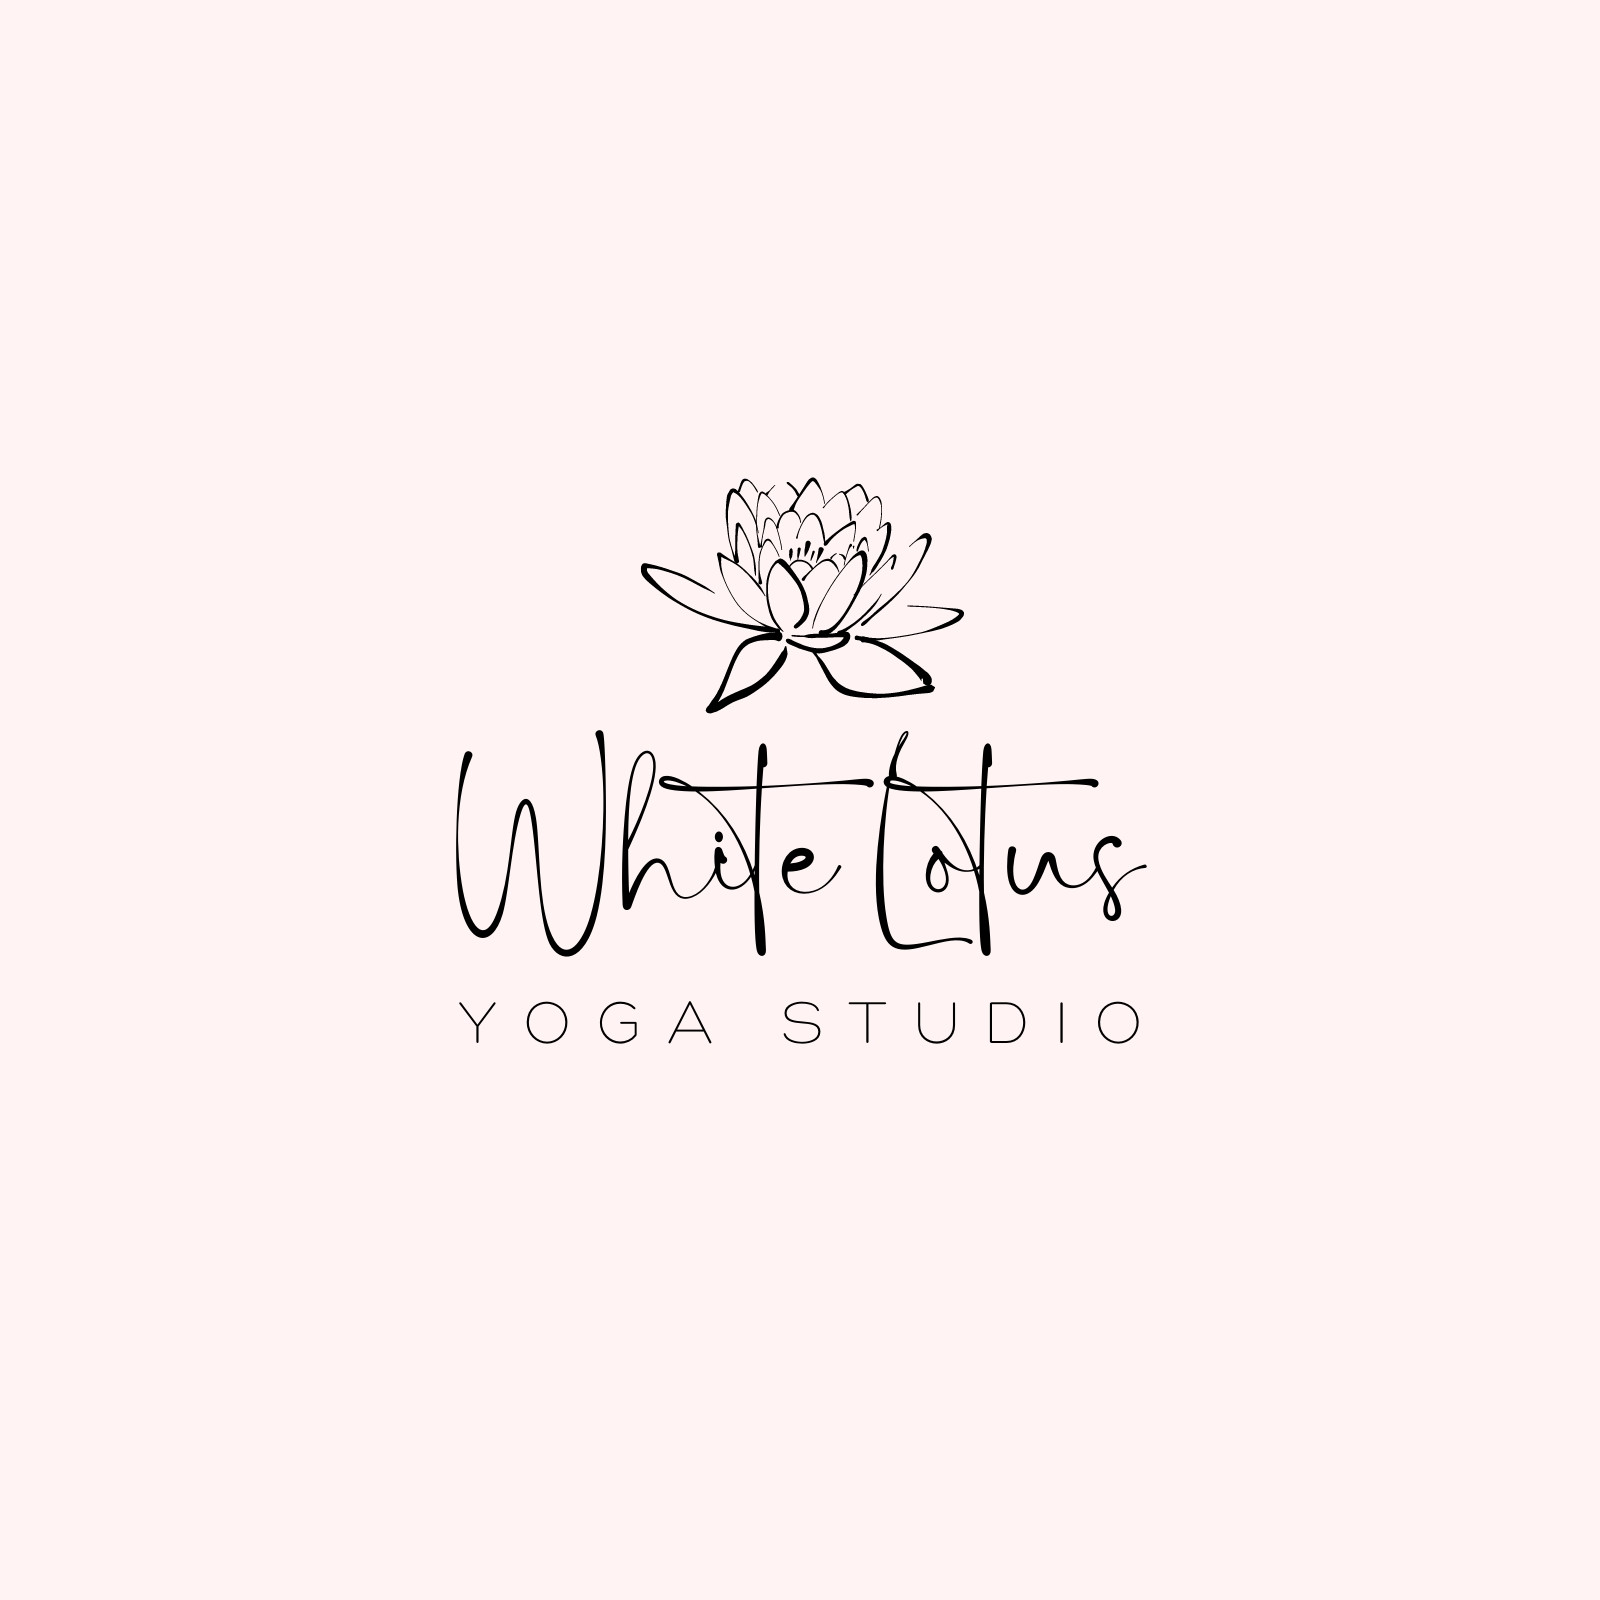 yoga logos